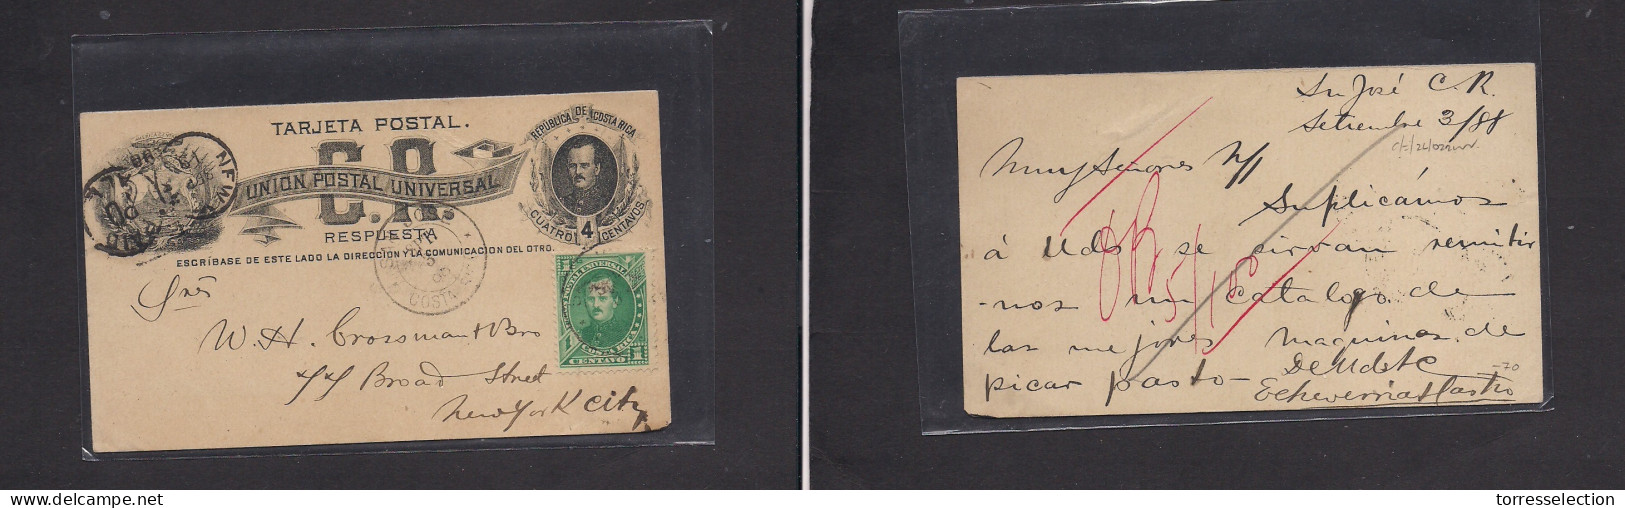 COSTA RICA. 1888 (3 Sept) San José - USA, NYC (19 Sept) 4c Black Stat Card + 1c Green Adtl, Tied Cds. Fine Early Usage. - Costa Rica